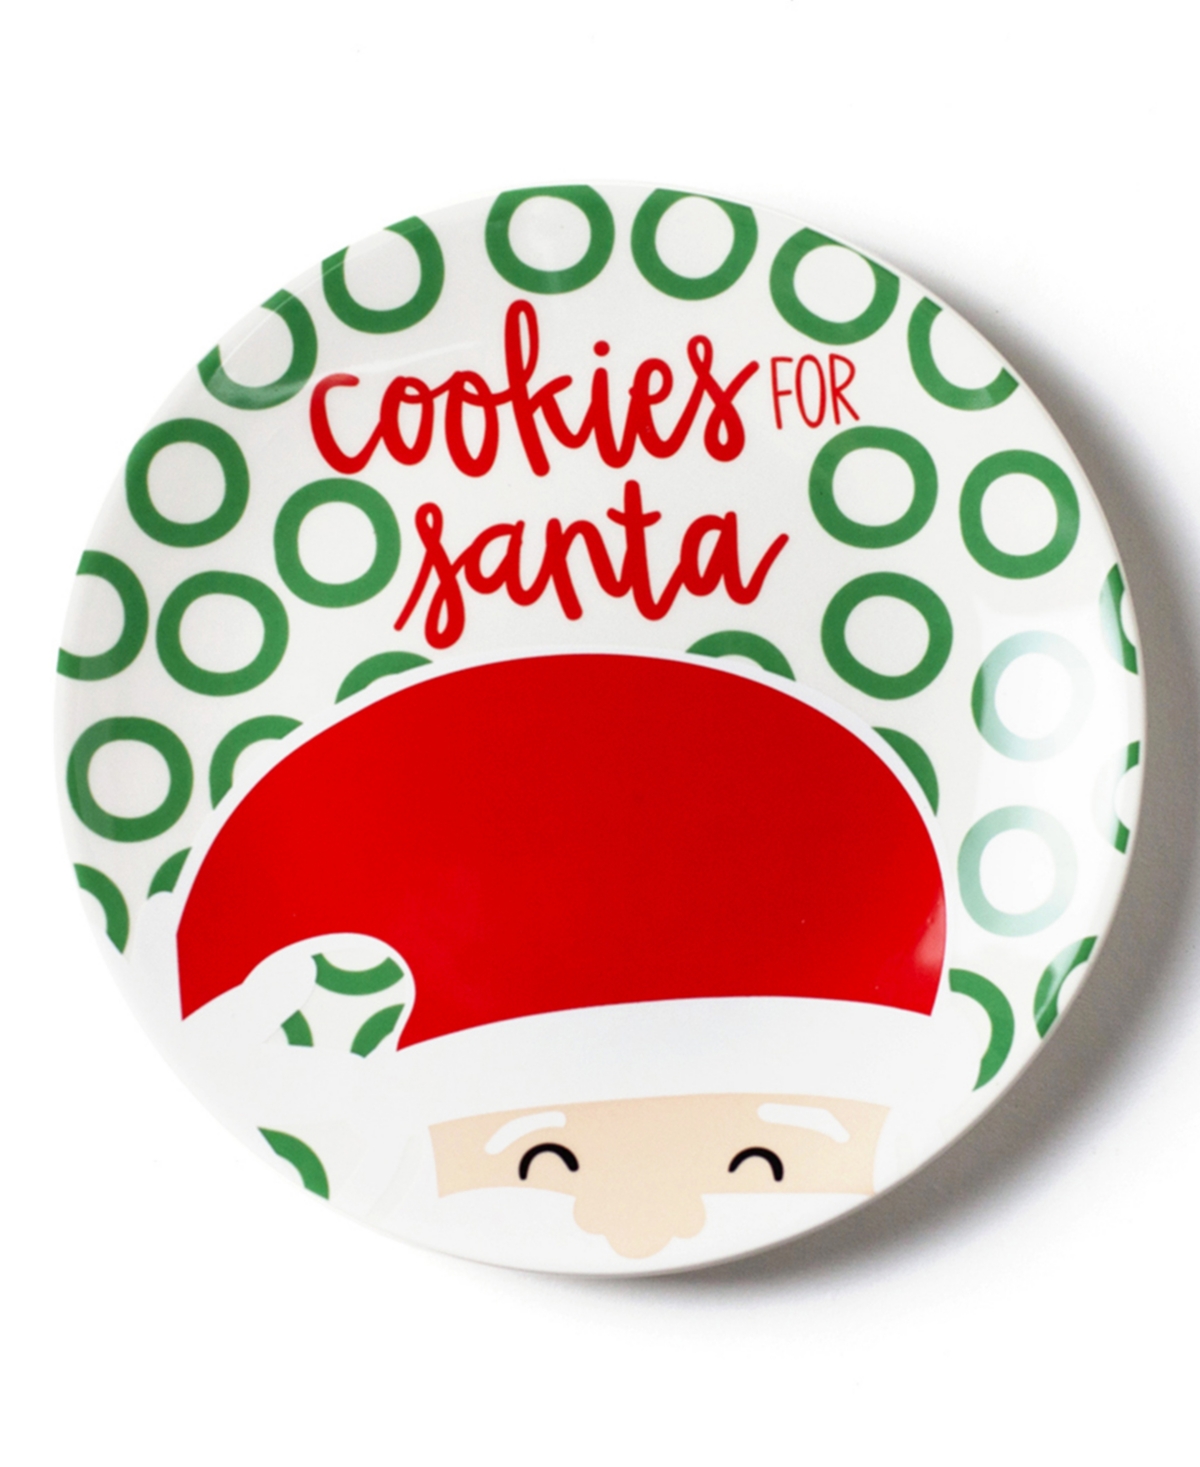 North Pole Cookies for Santa Plate - Multi